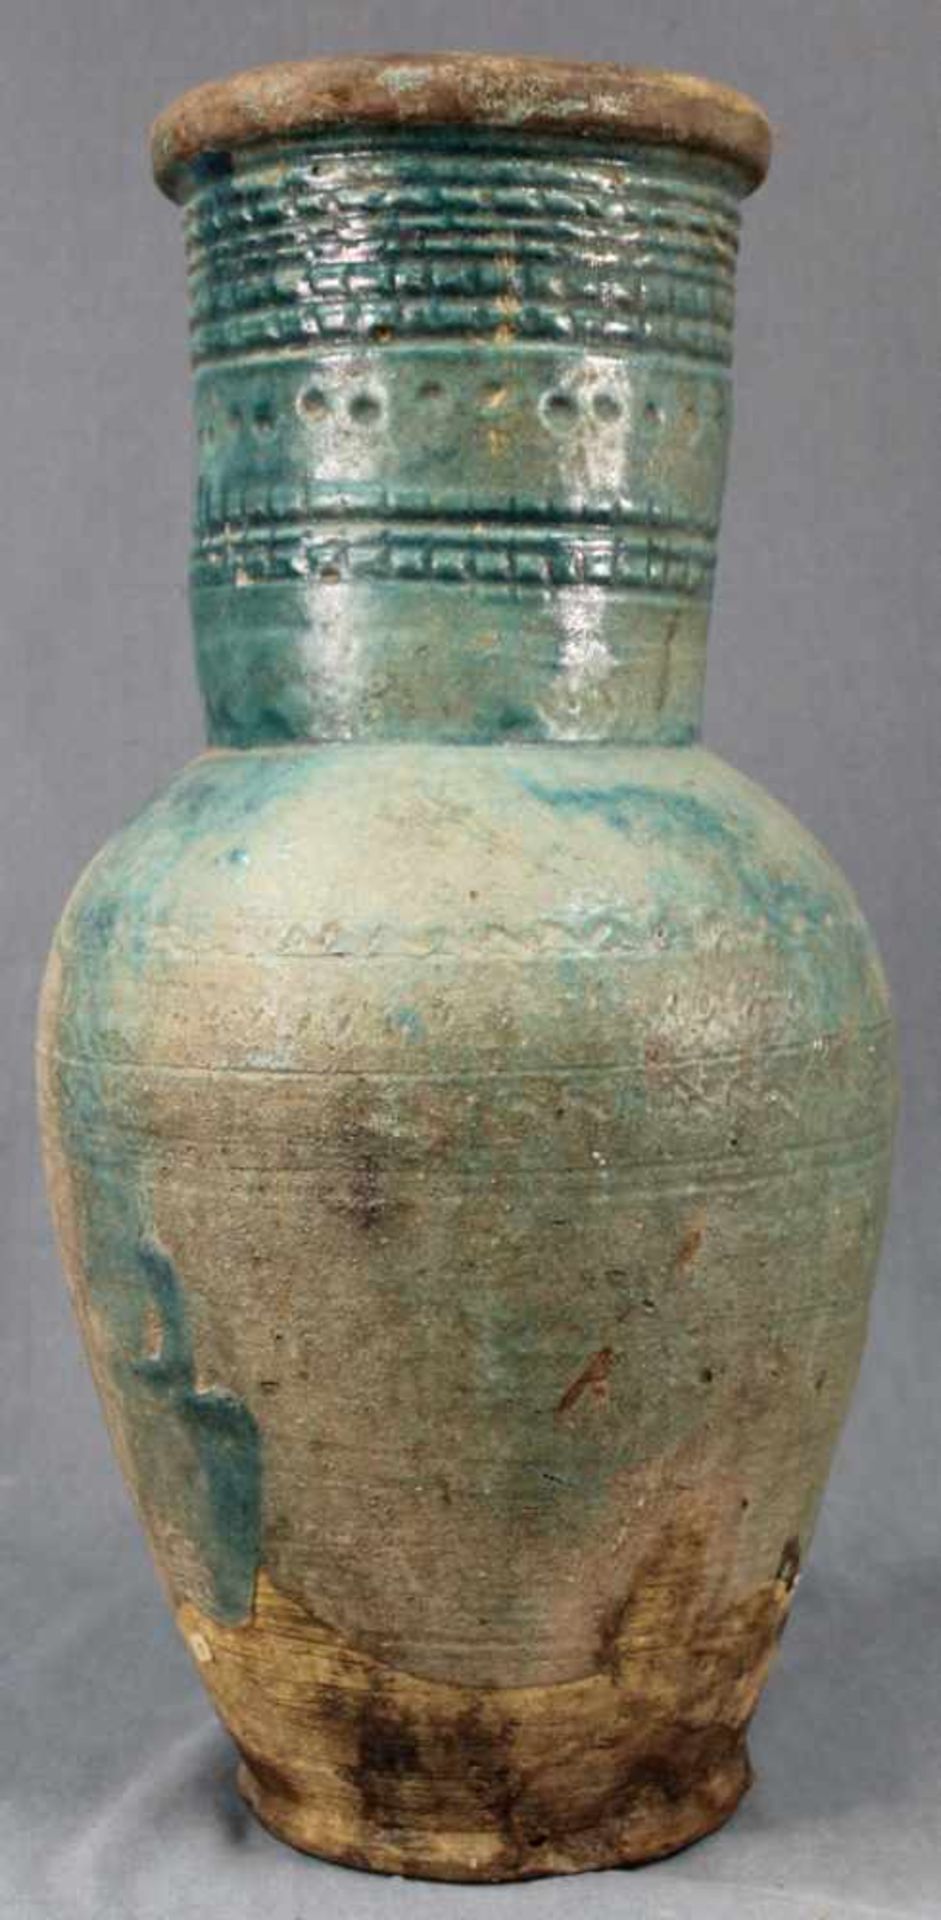 Amphore / Vase. Steingut. Türkisfarbene Glasur. Wohl Iran / Zentralasien um 1100.57 cm hoch. - Image 3 of 9